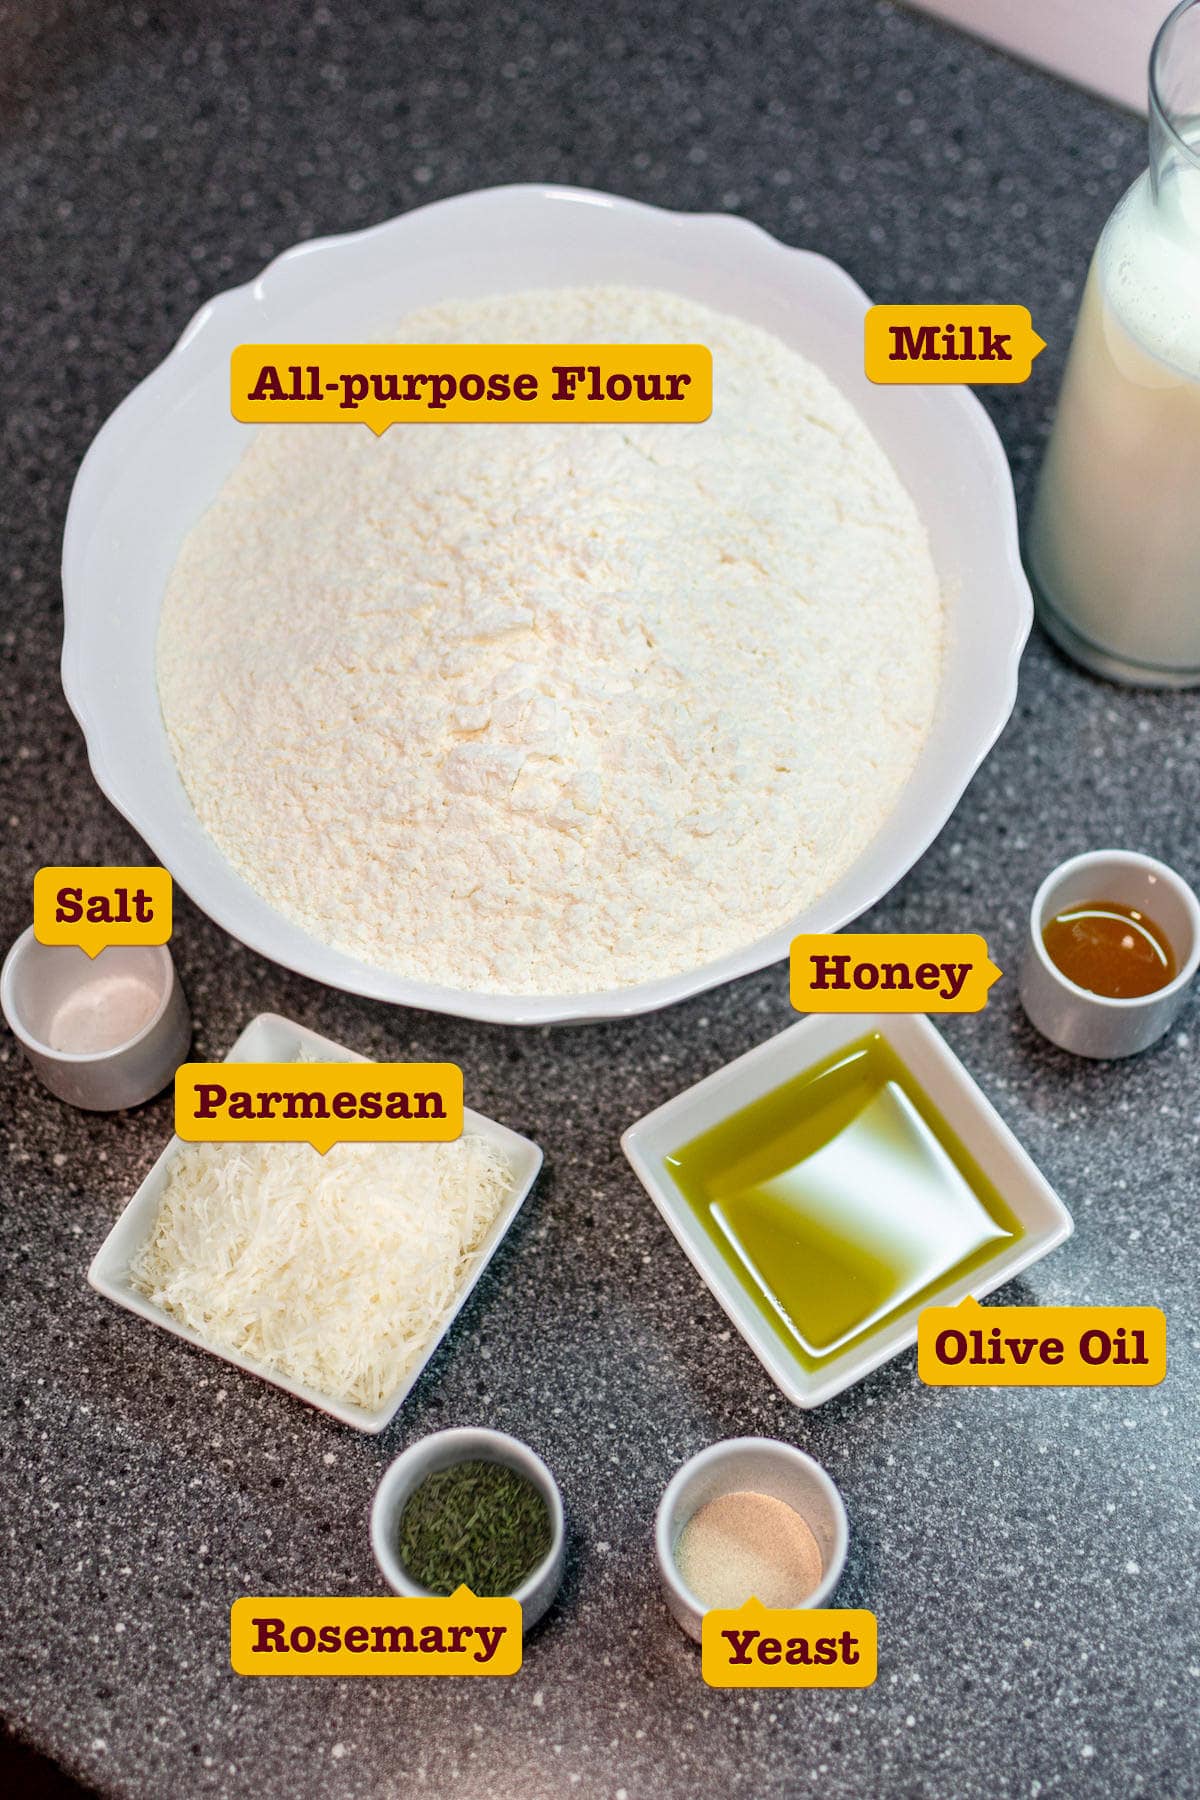 All purpose-flour, parmesan, milk, olive oil on a stone table.